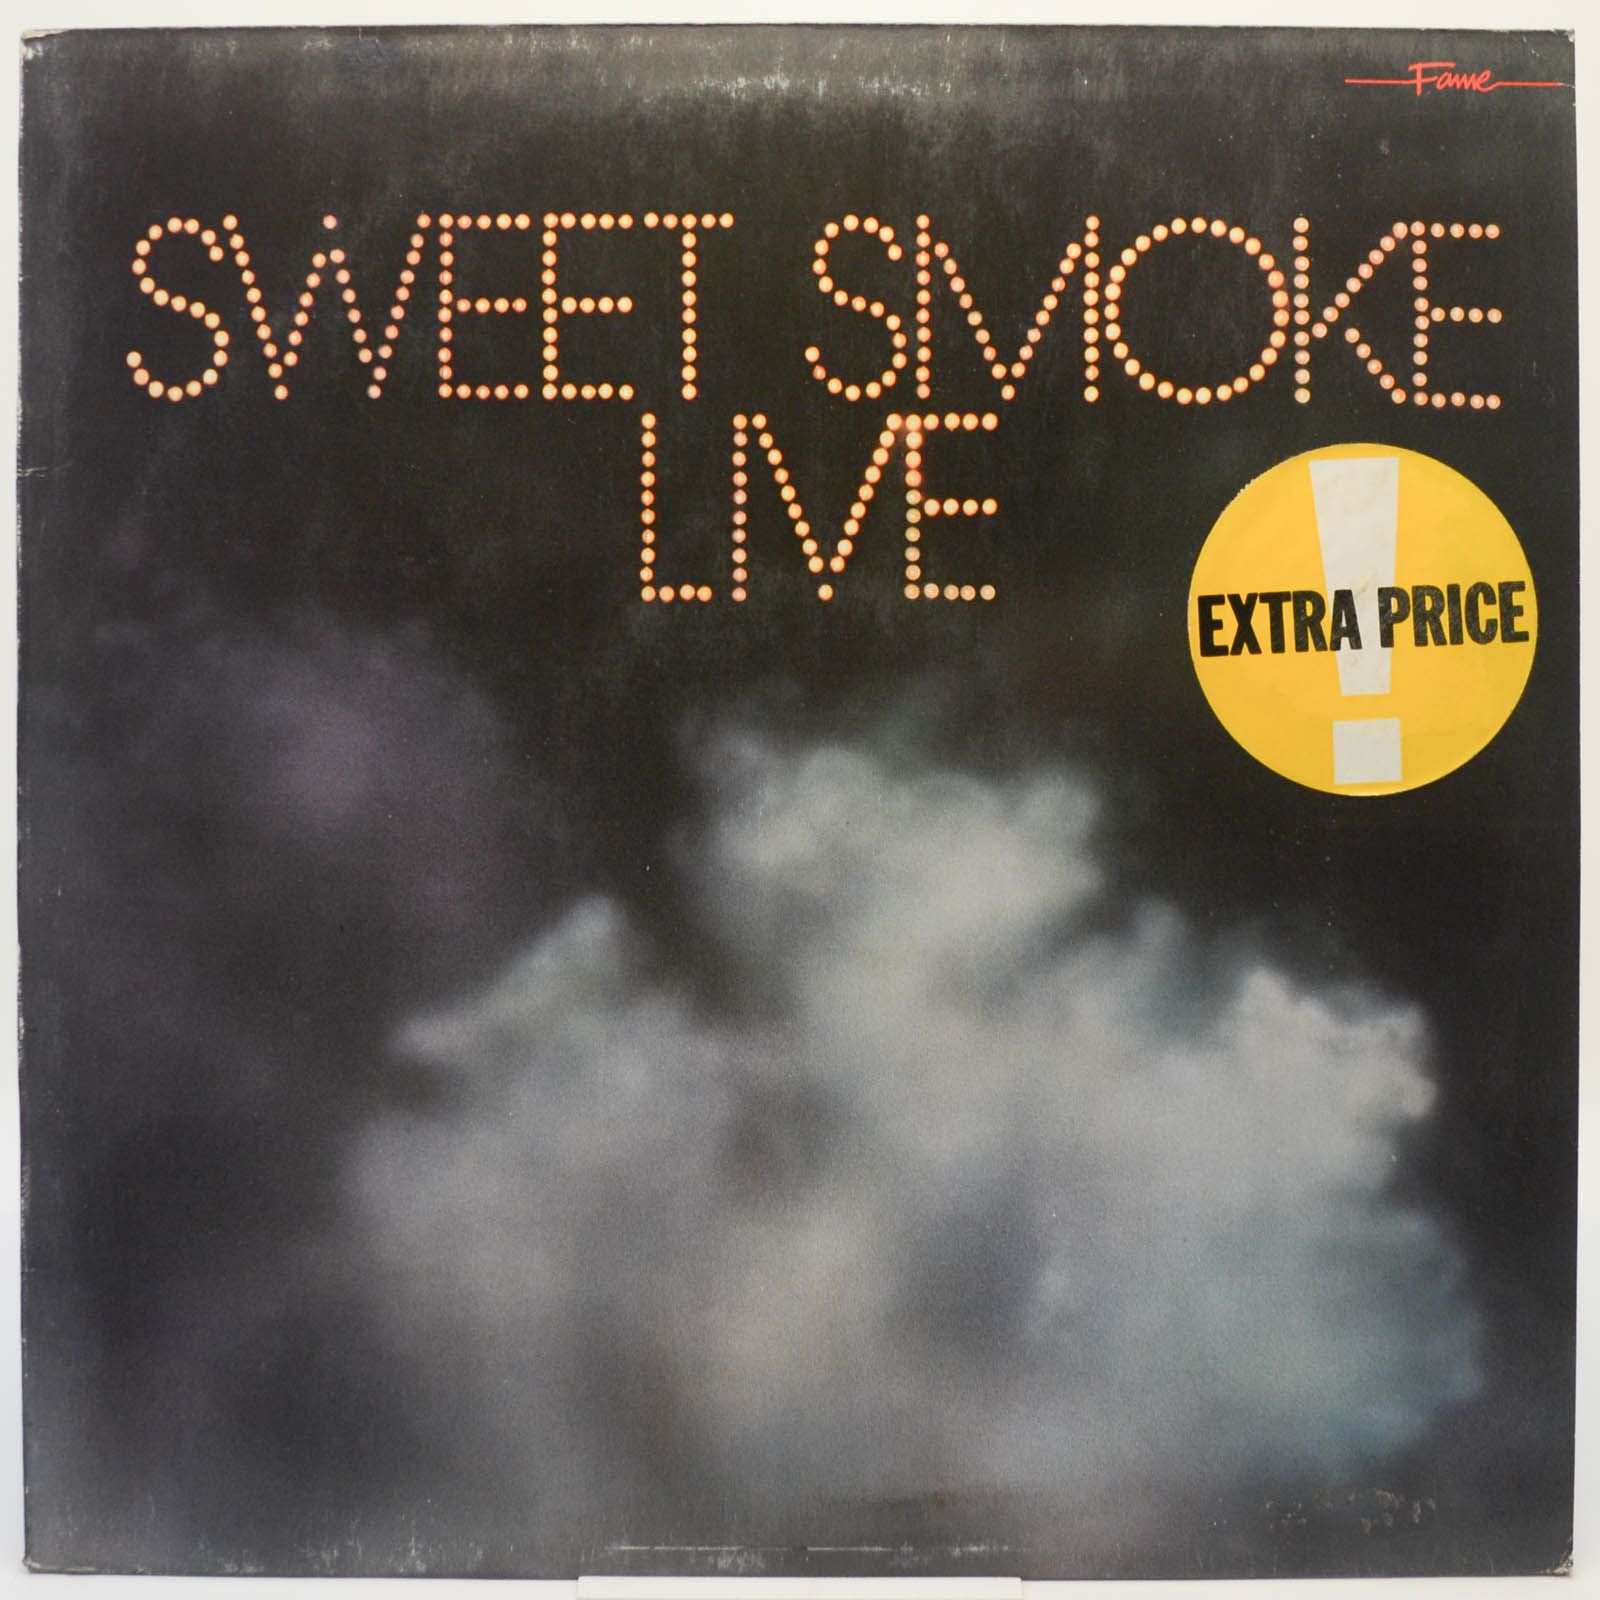 Sweet Smoke — Sweet Smoke Live, 1974